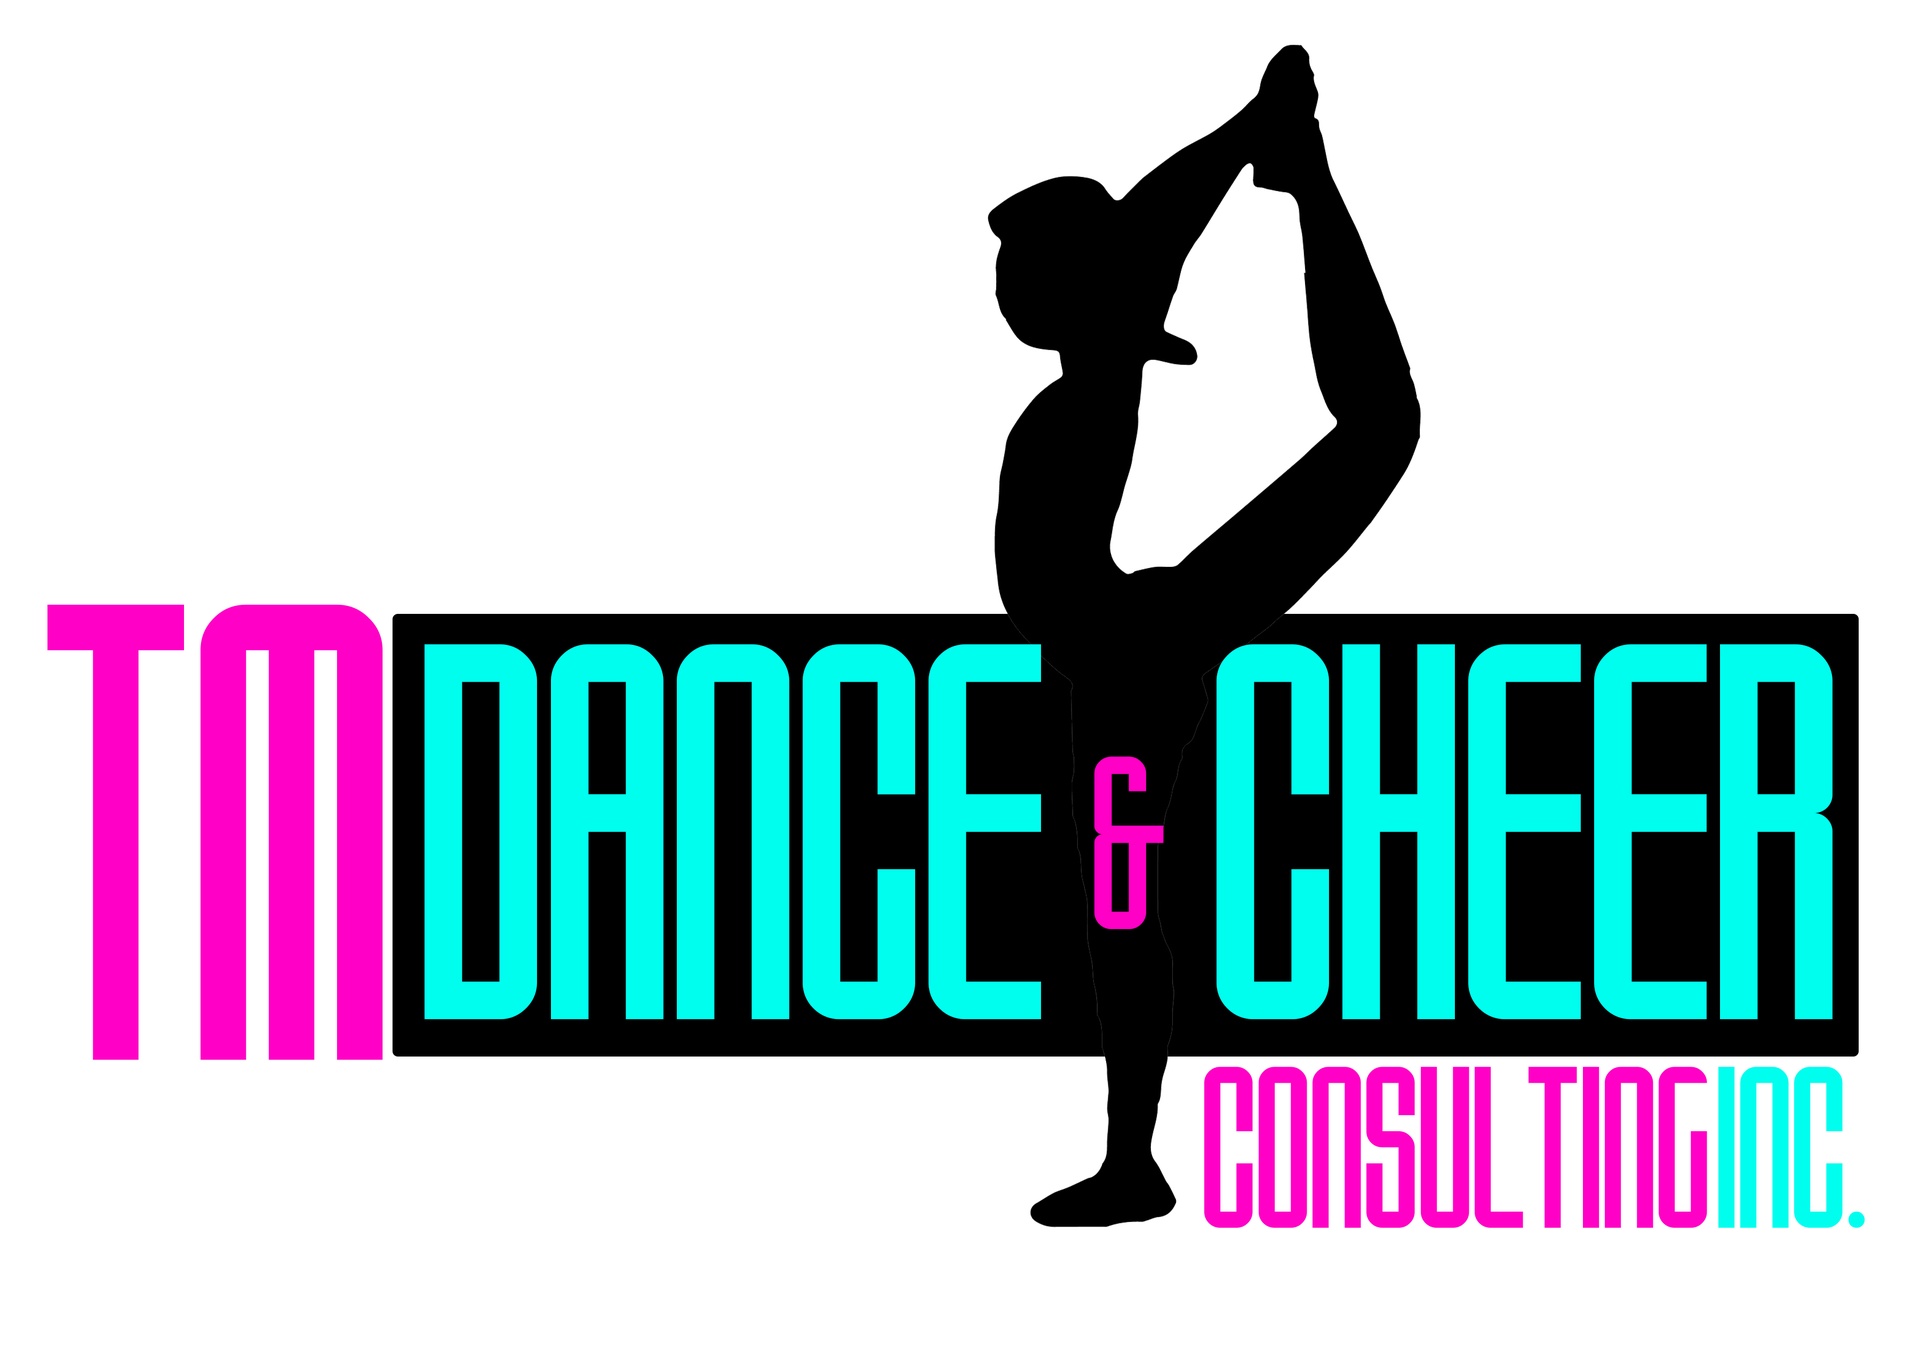 TM Dance & Cheer, Consulting Inc.